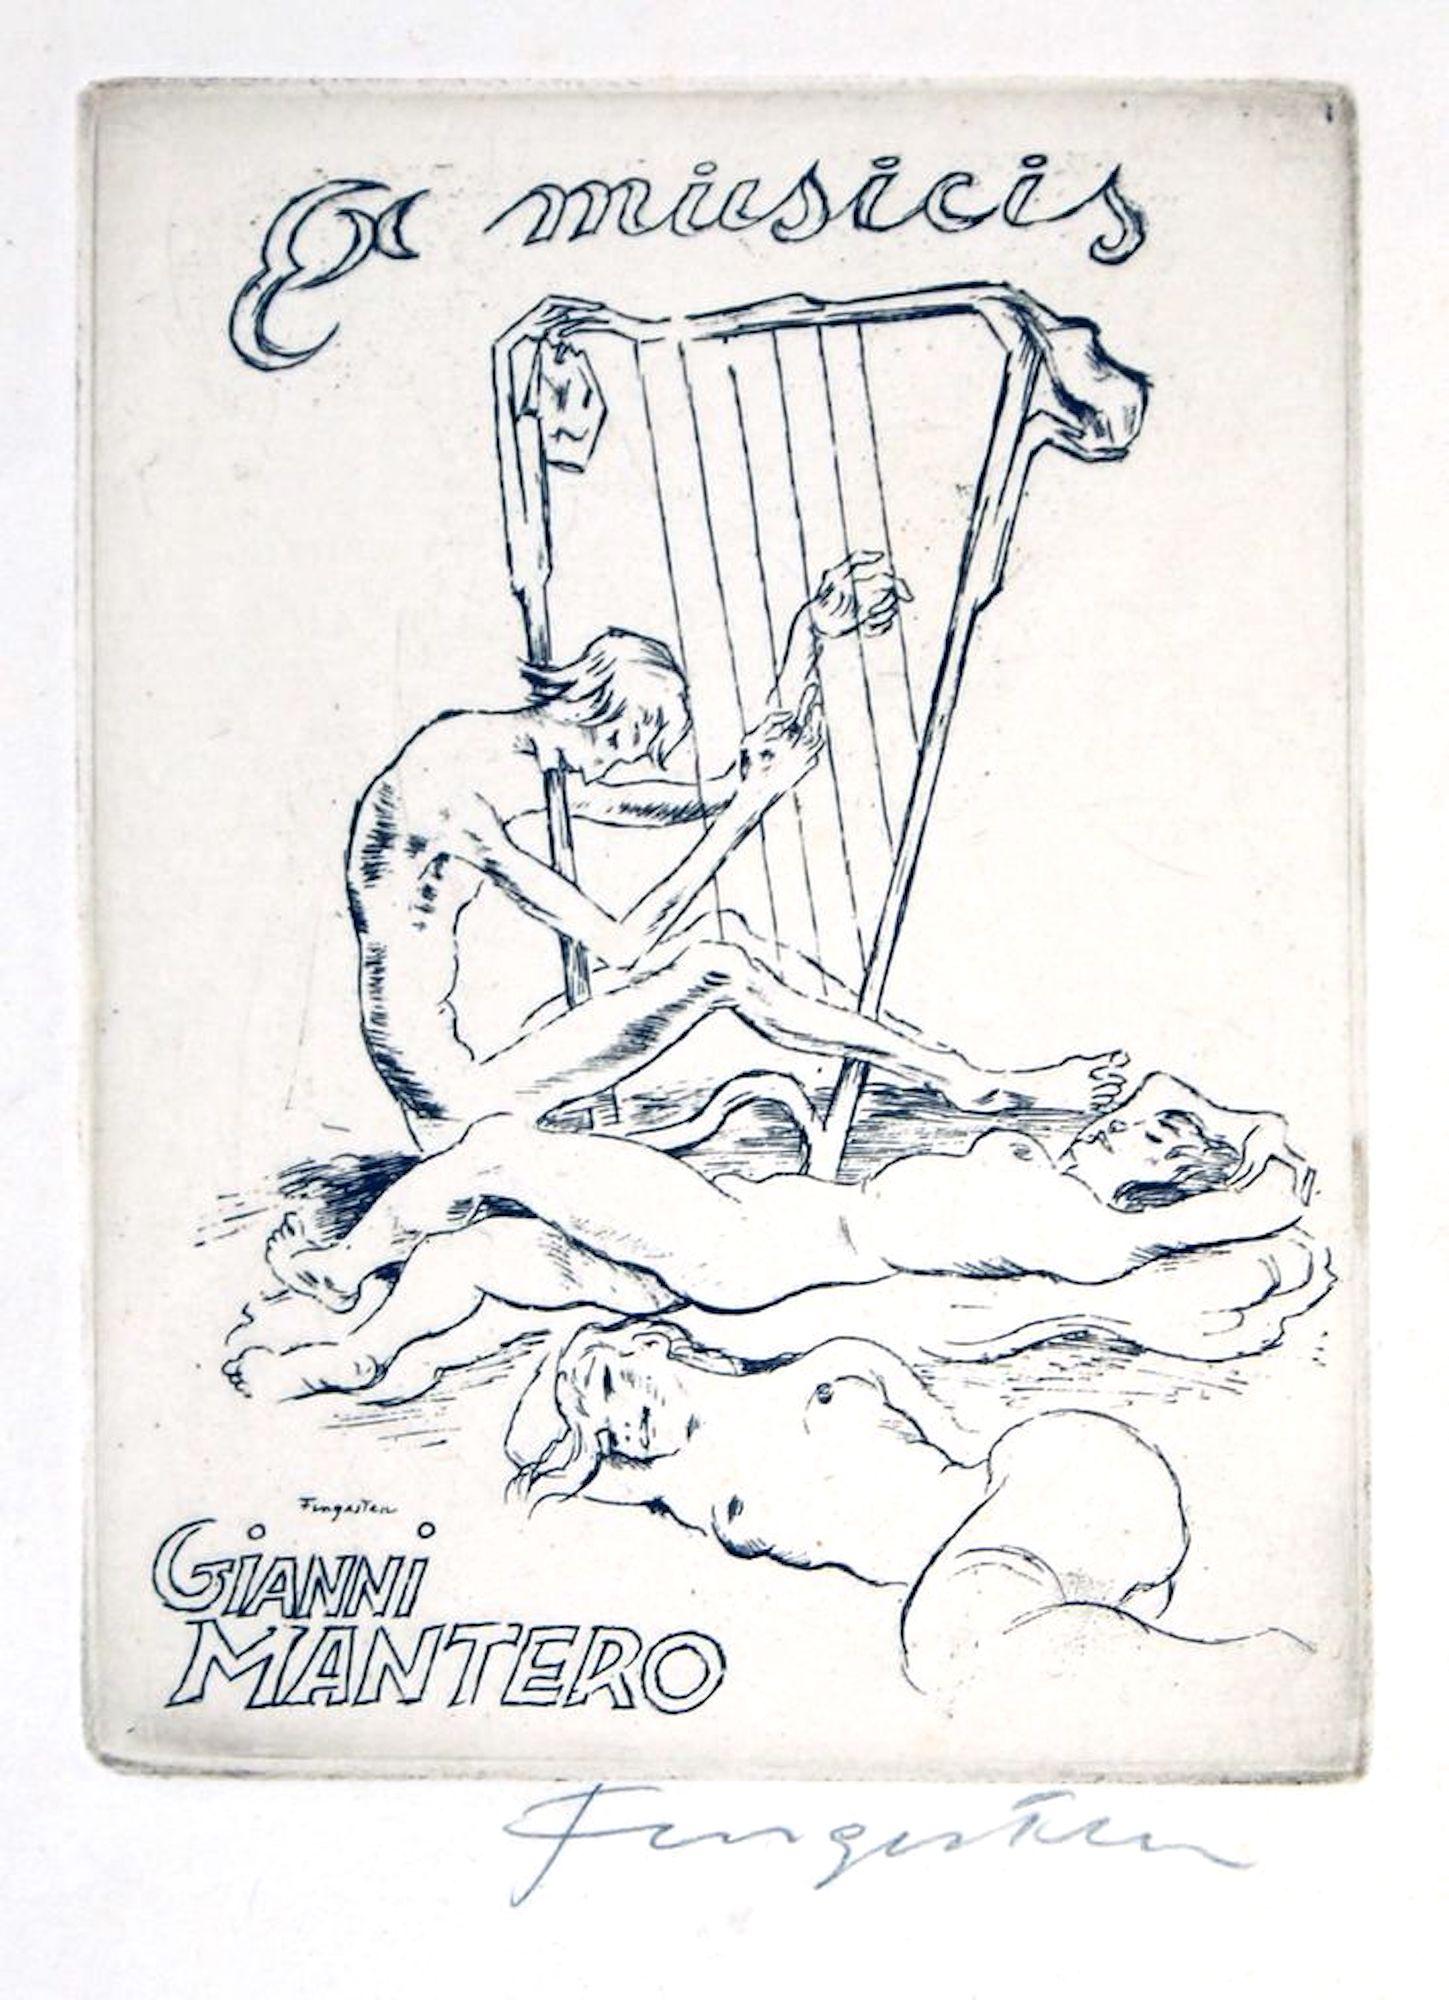 Michel Fingesten Figurative Print - Ex Musicis Gianni Mantero - Original Etching by M. Fingesten - Early 1900